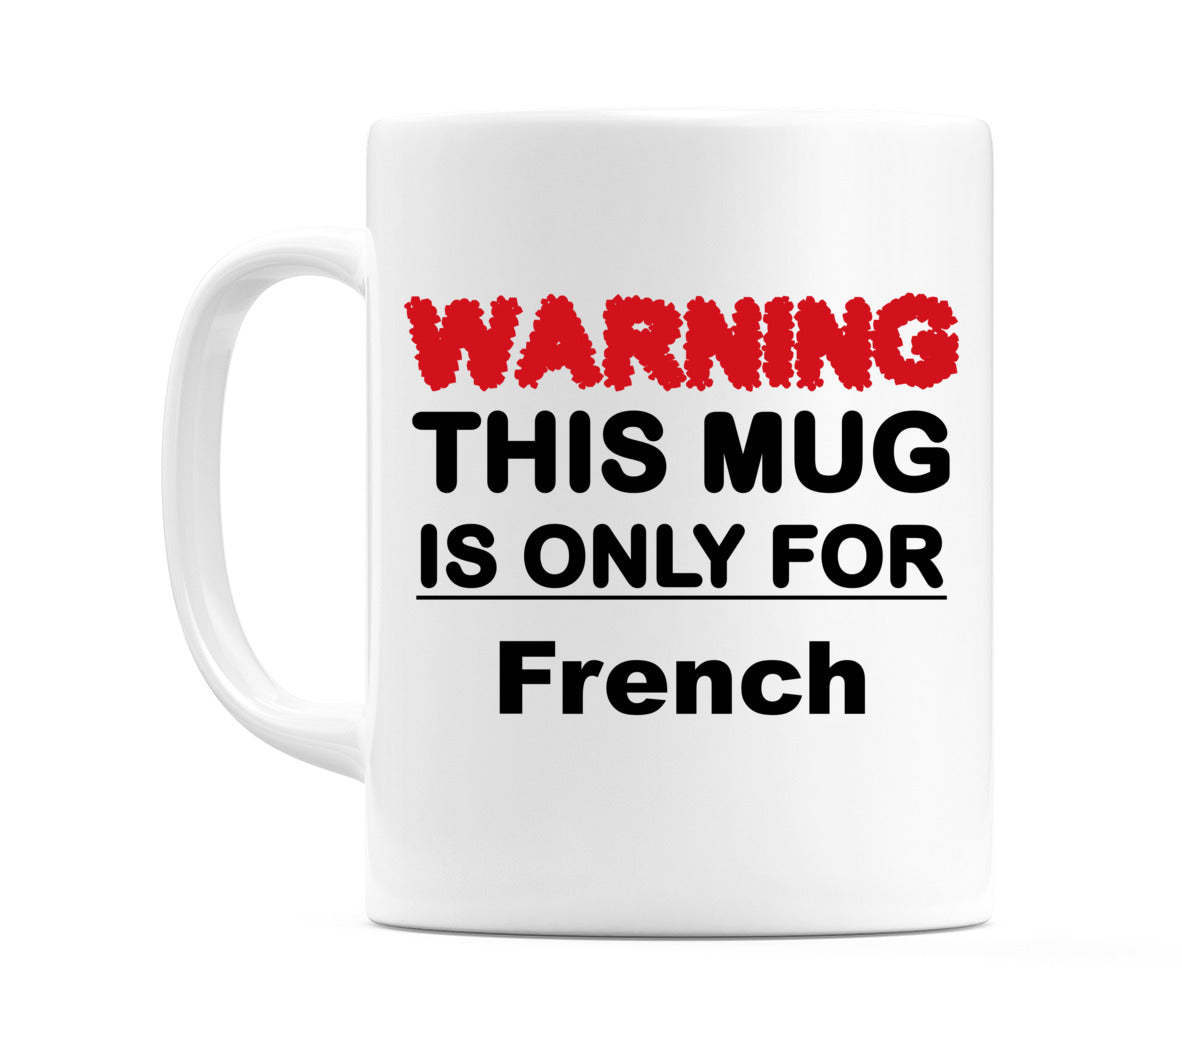 Warning This Mug is ONLY for French Mug